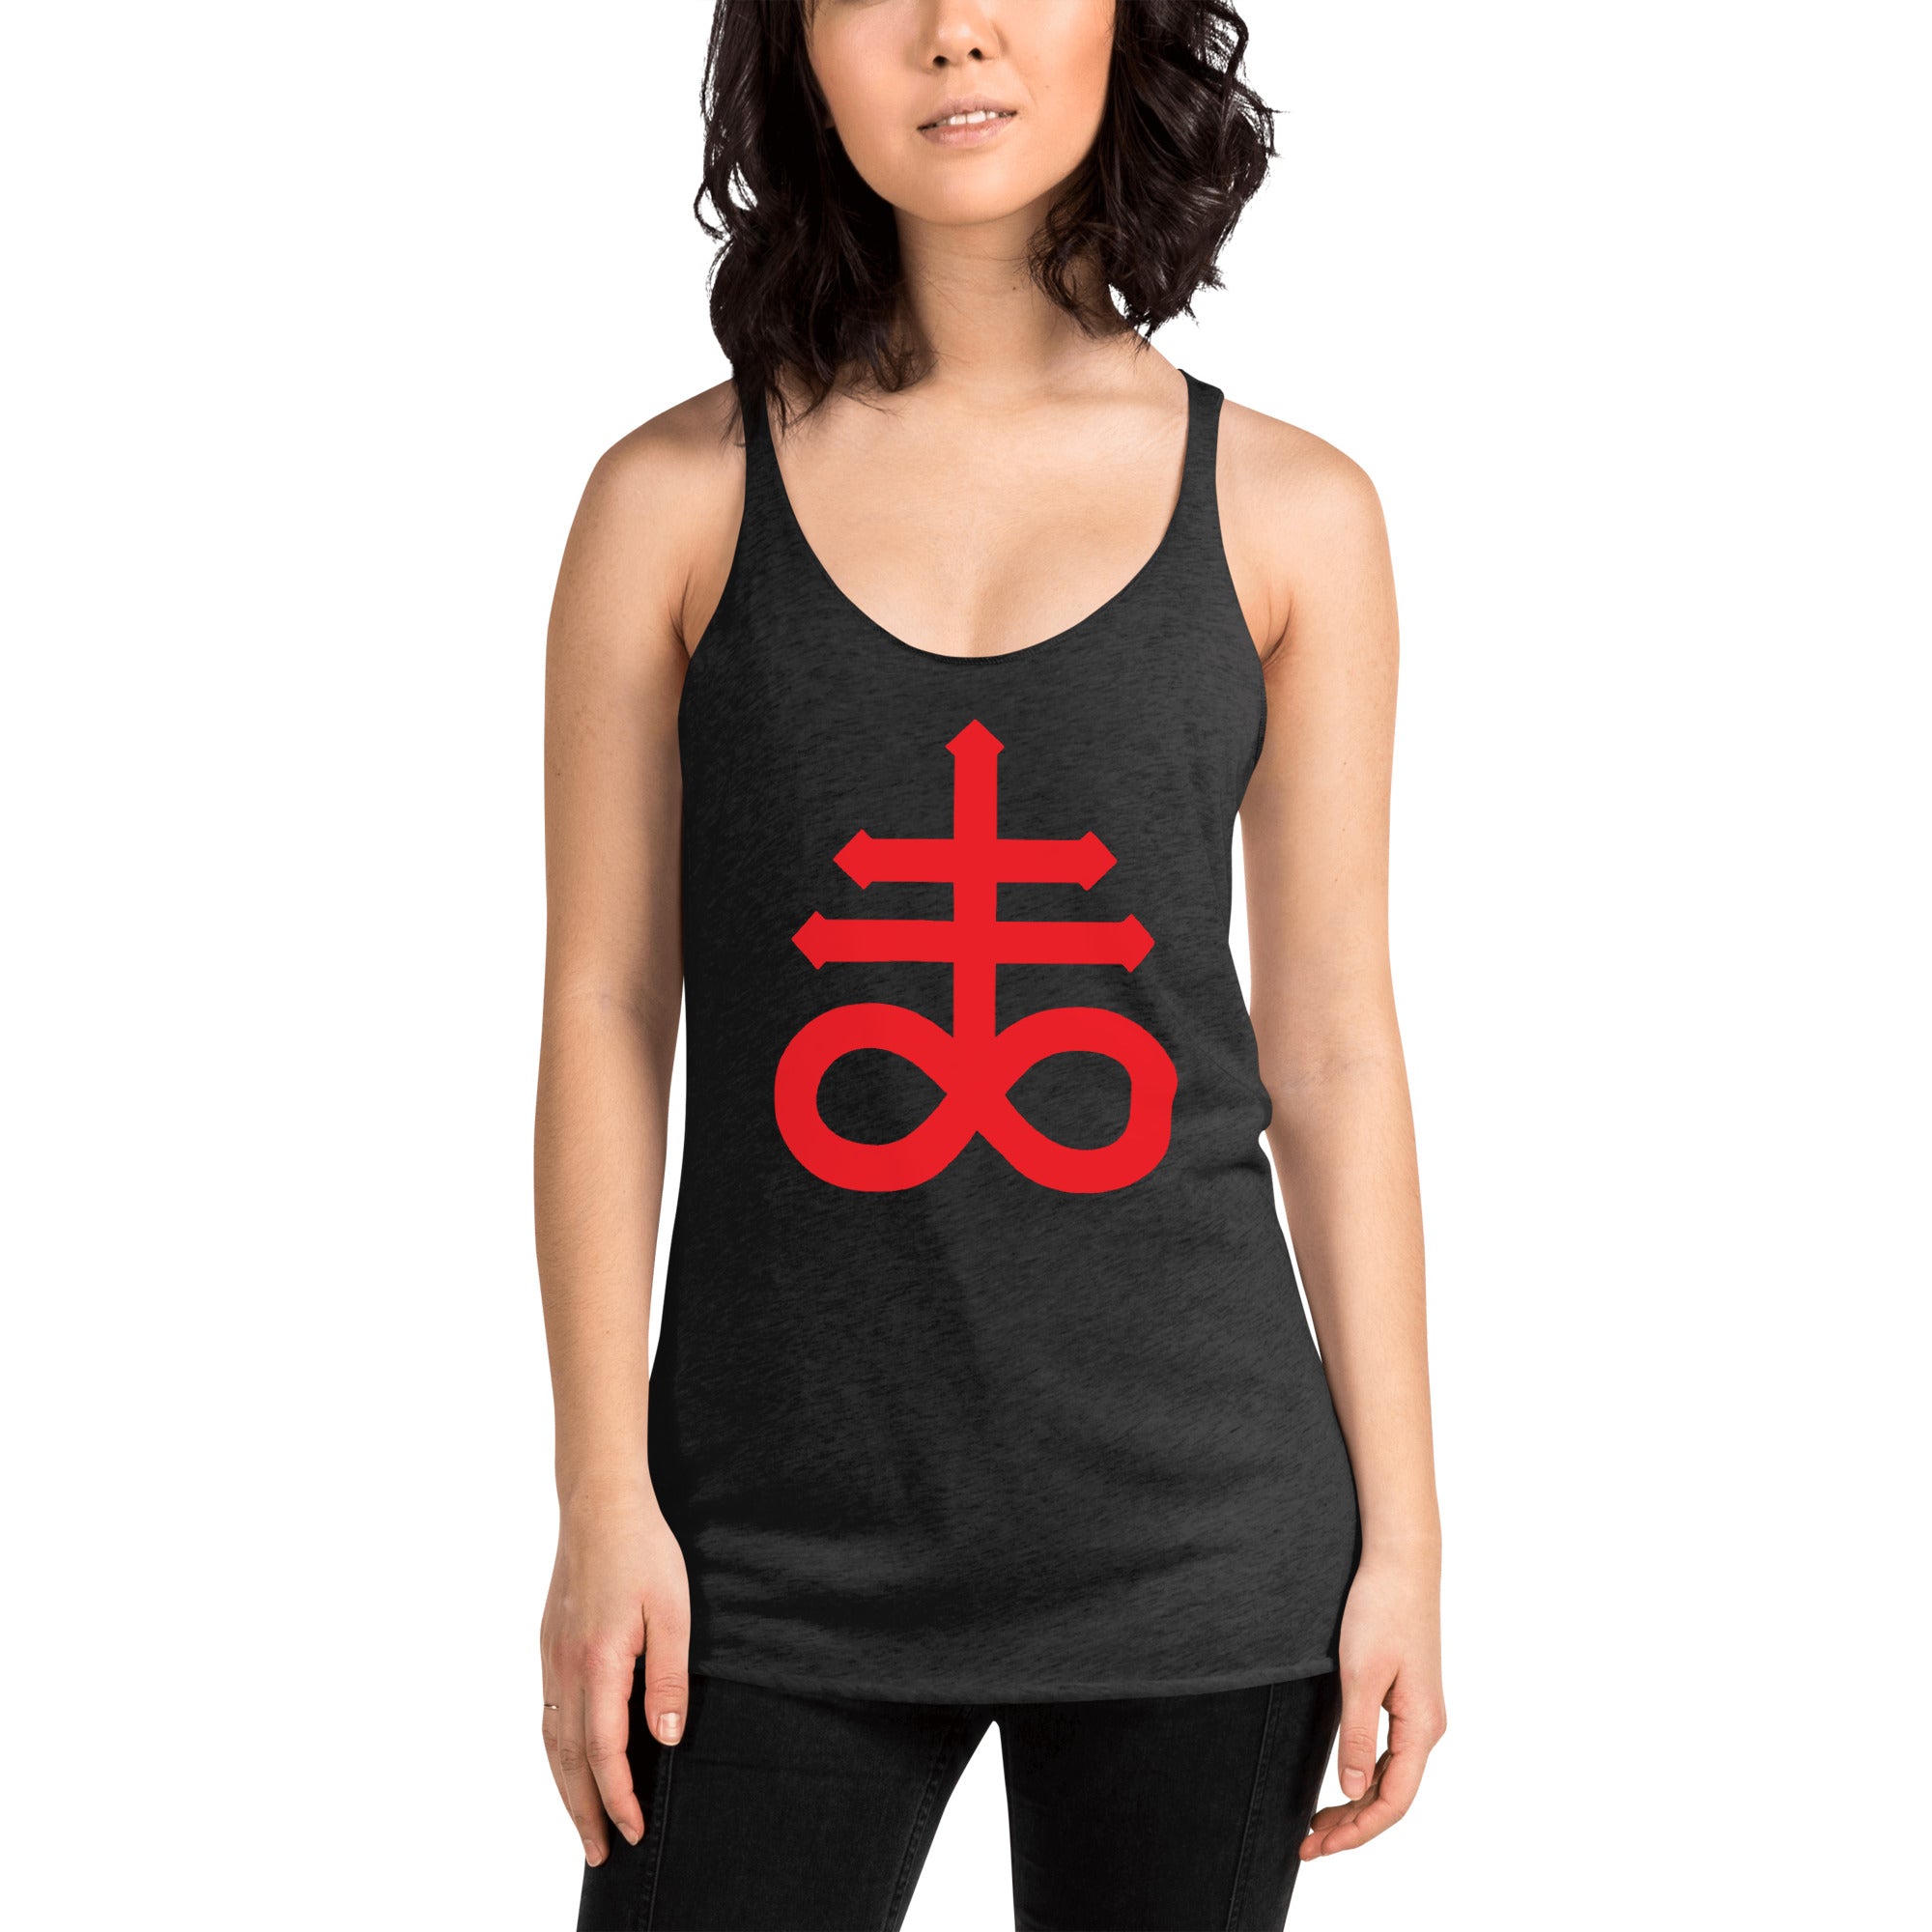 The Leviathan Cross of Satan Occult Symbol Women's Racerback Tank Top Shirt Red Print - Edge of Life Designs